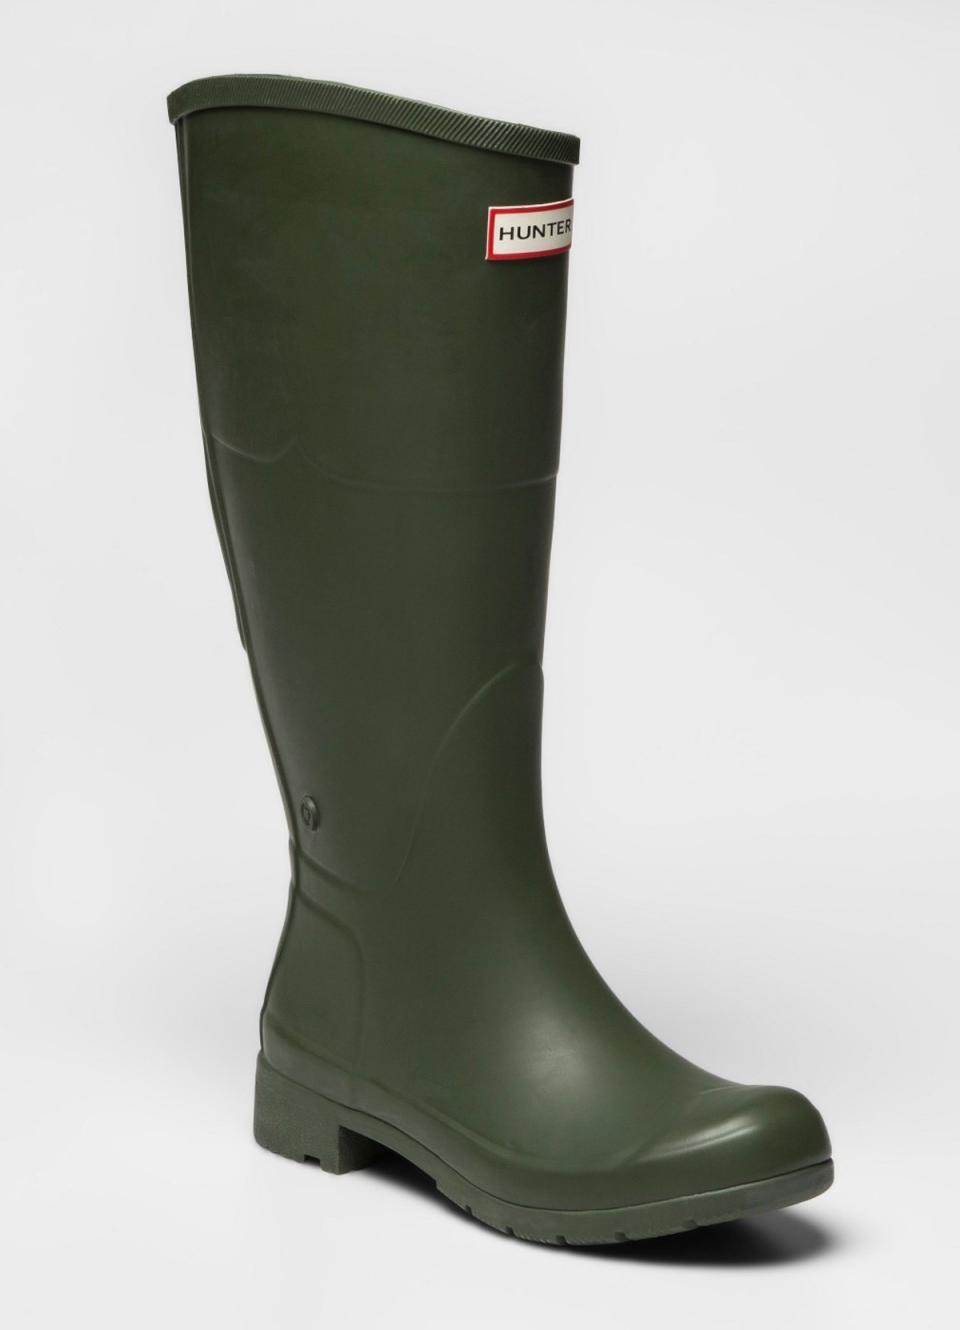 Hunter For Target Women's Waterproof Rain Boots, $40, Target